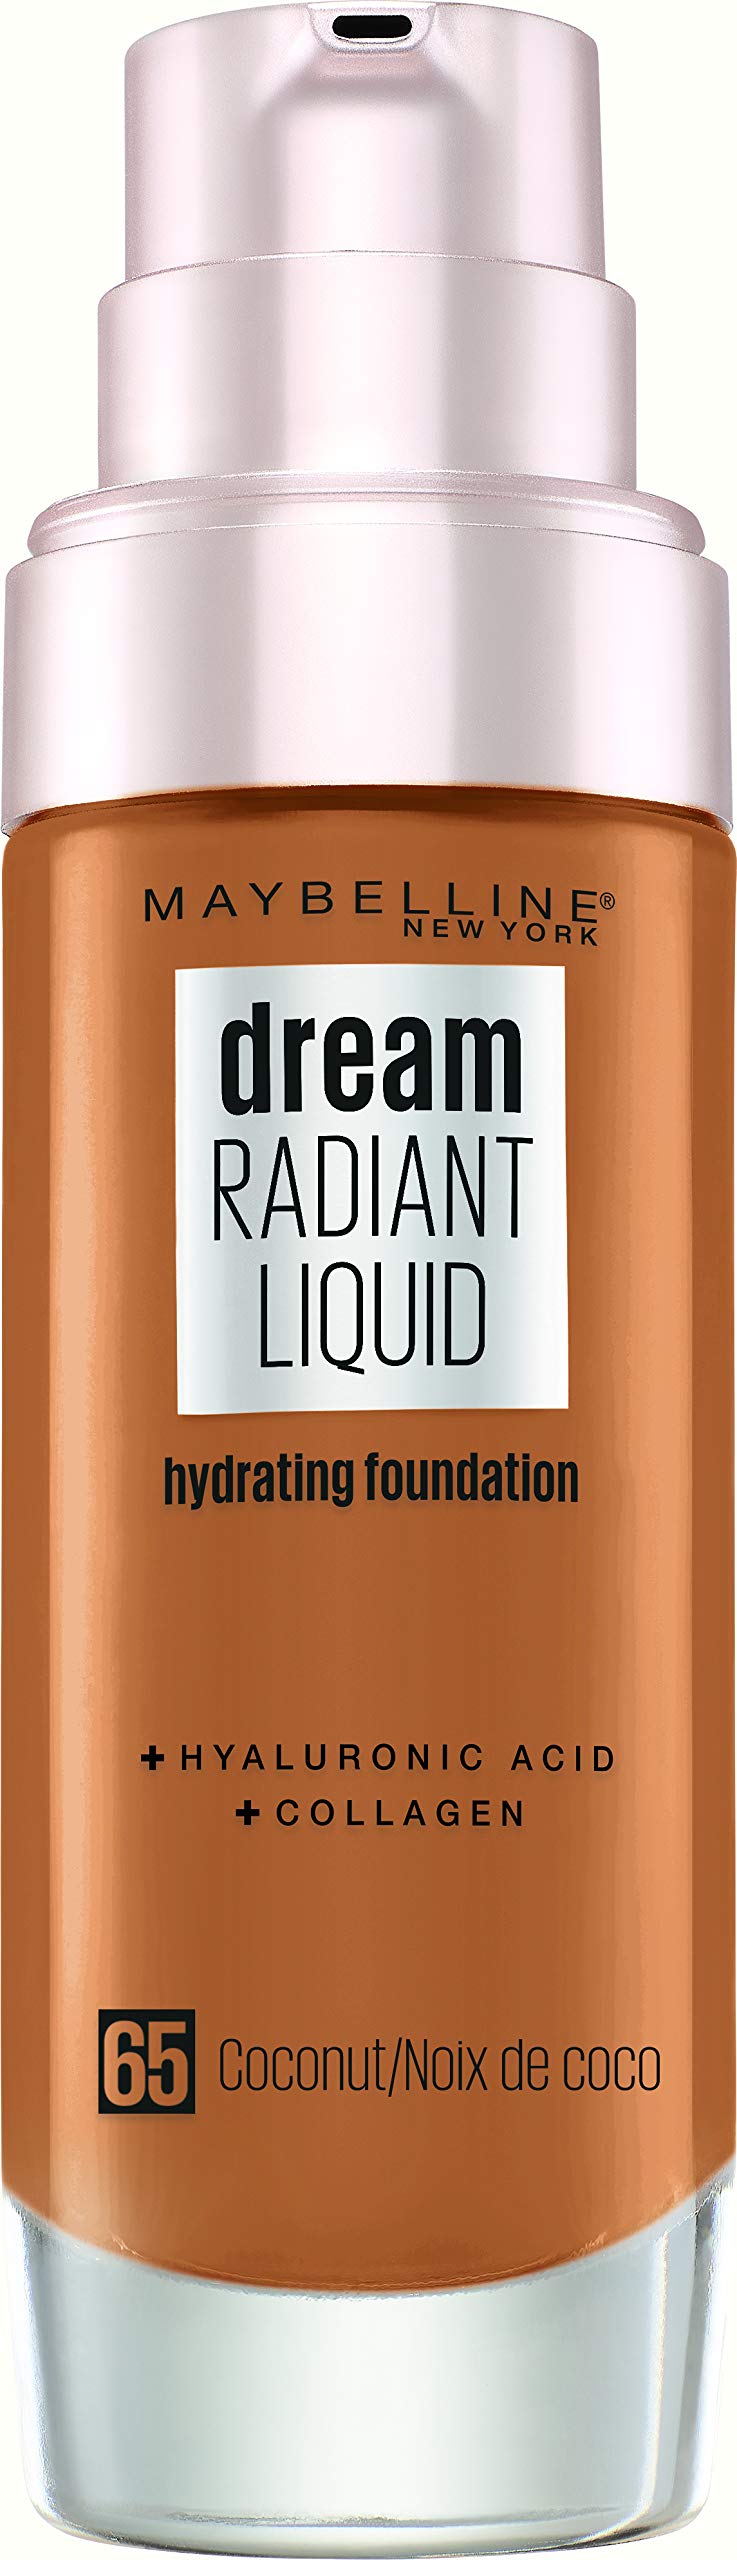 stylé  Maybelline New York - Fond de Teint soin hydratant - Dream Radiant liquid - Coconuts (65) - 30ml xnl6xzuTK en ligne